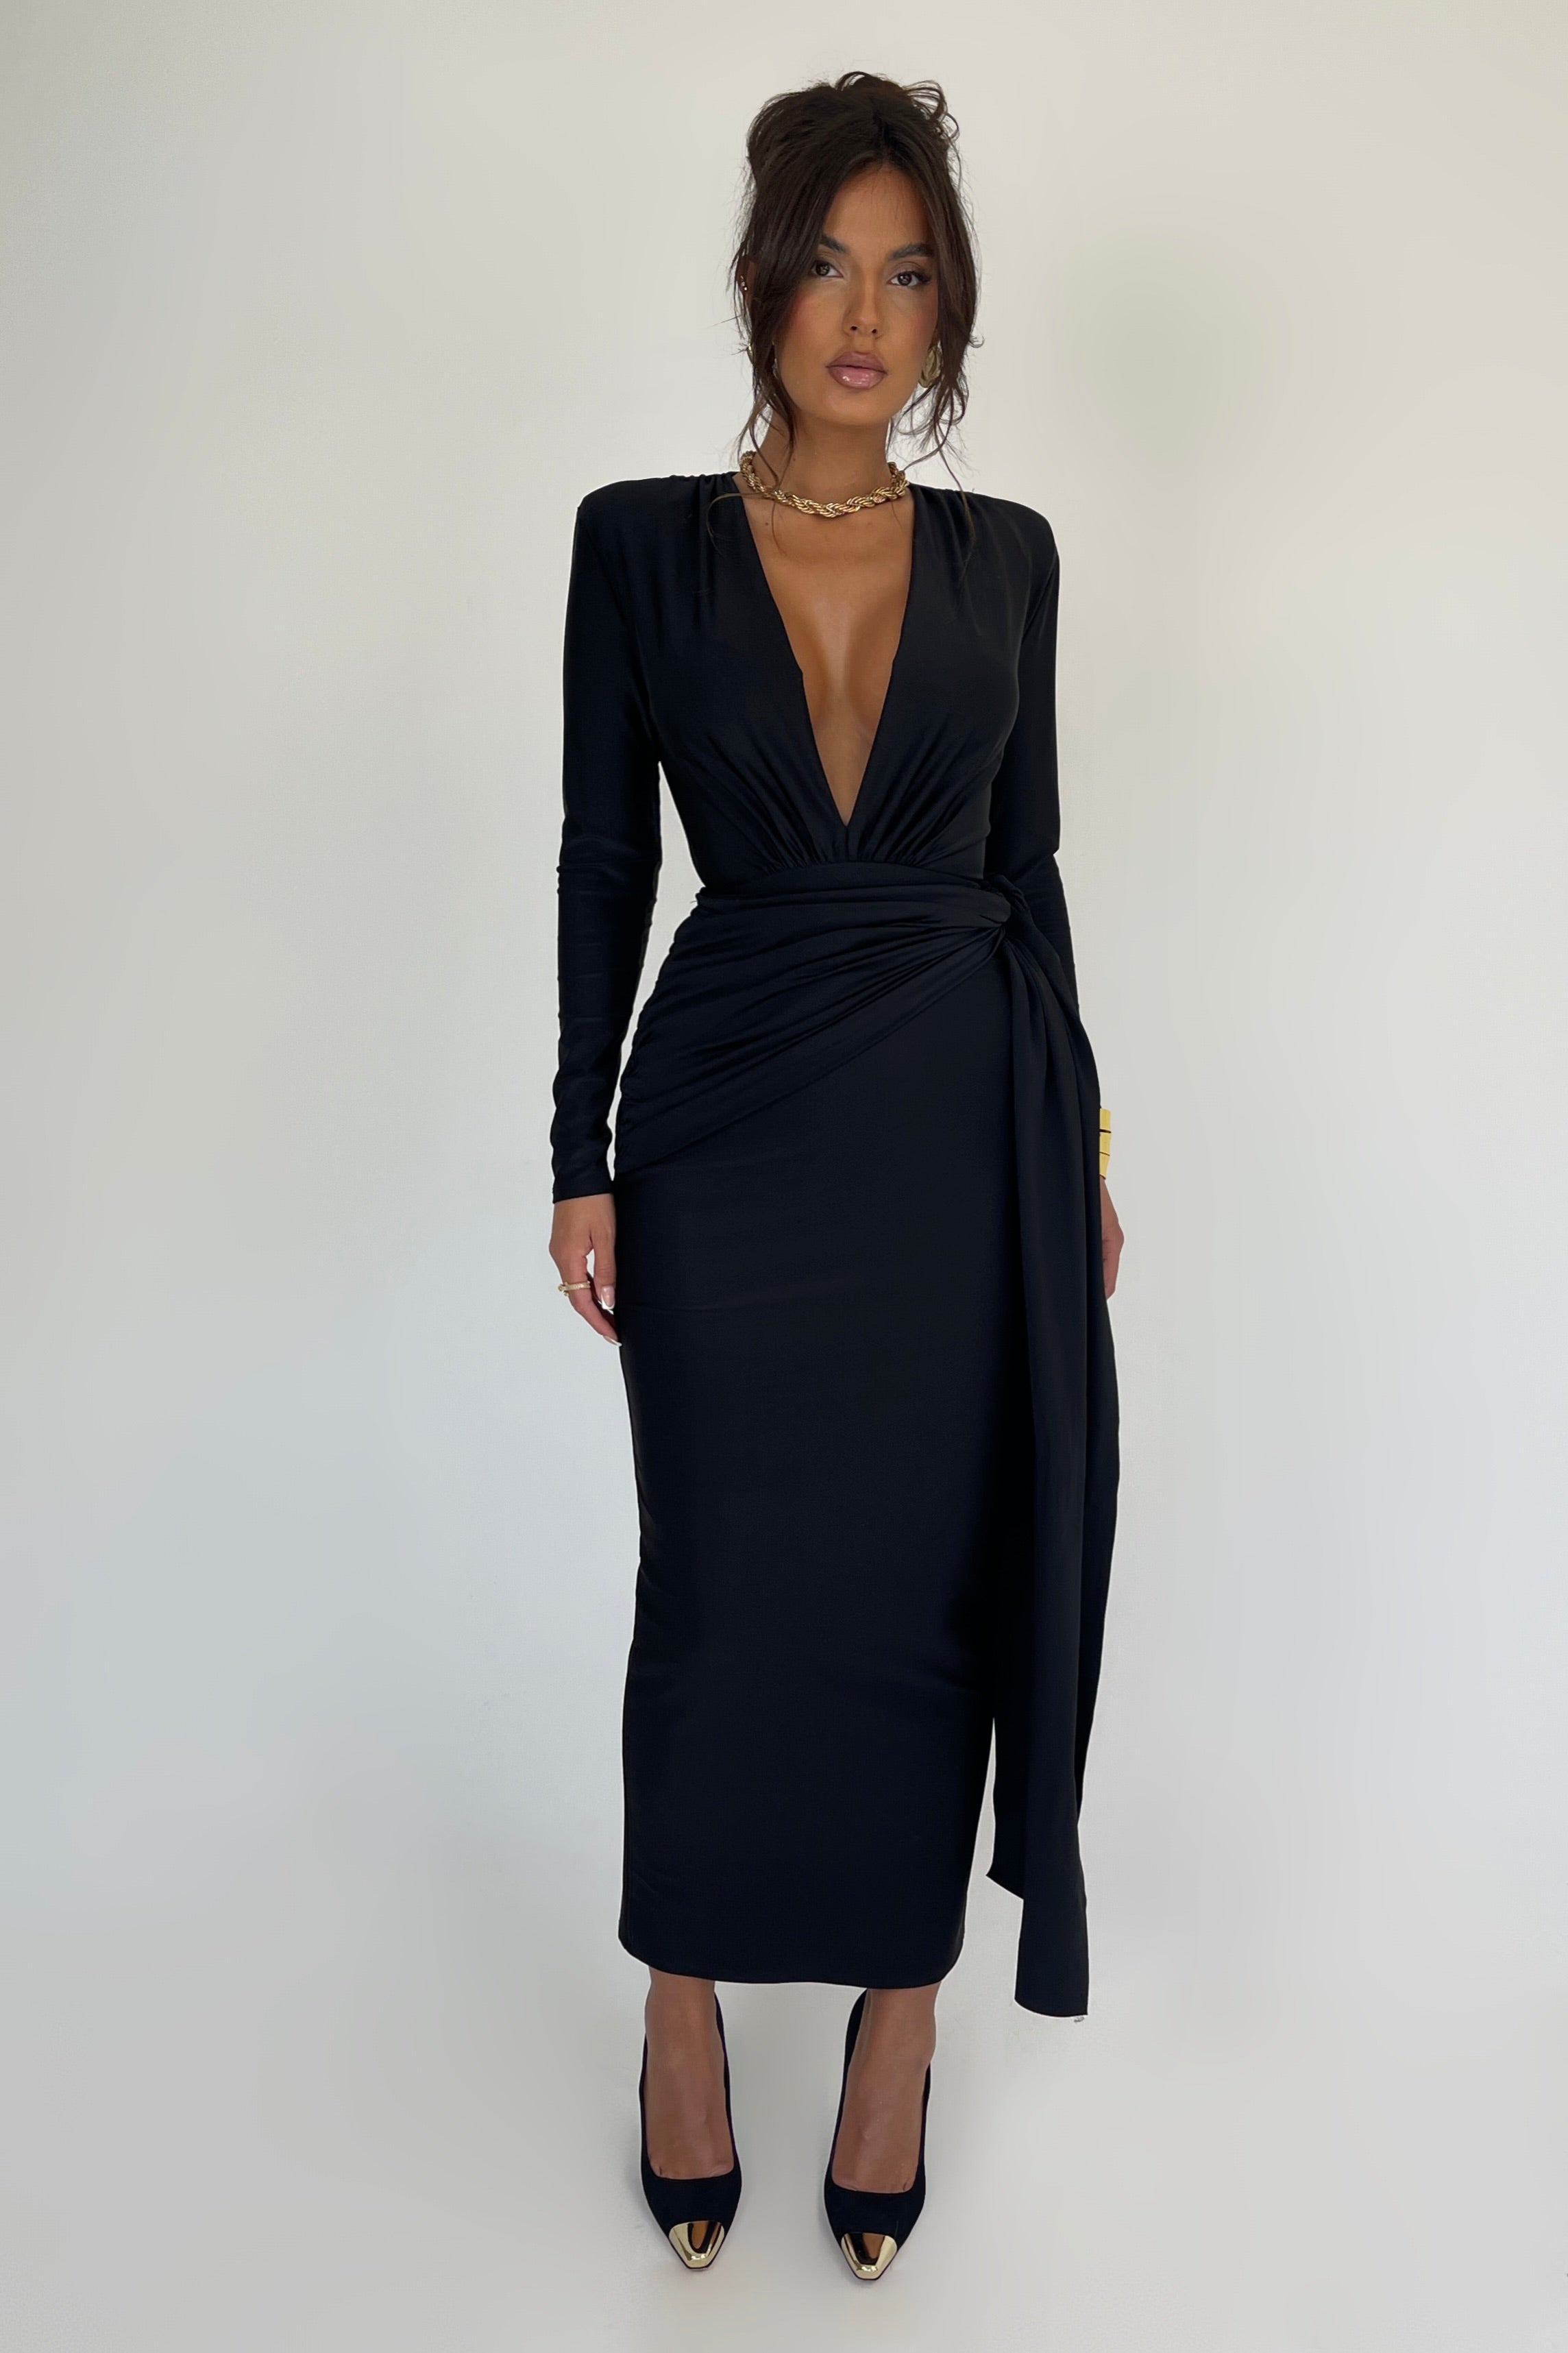 Arabella Black Dress